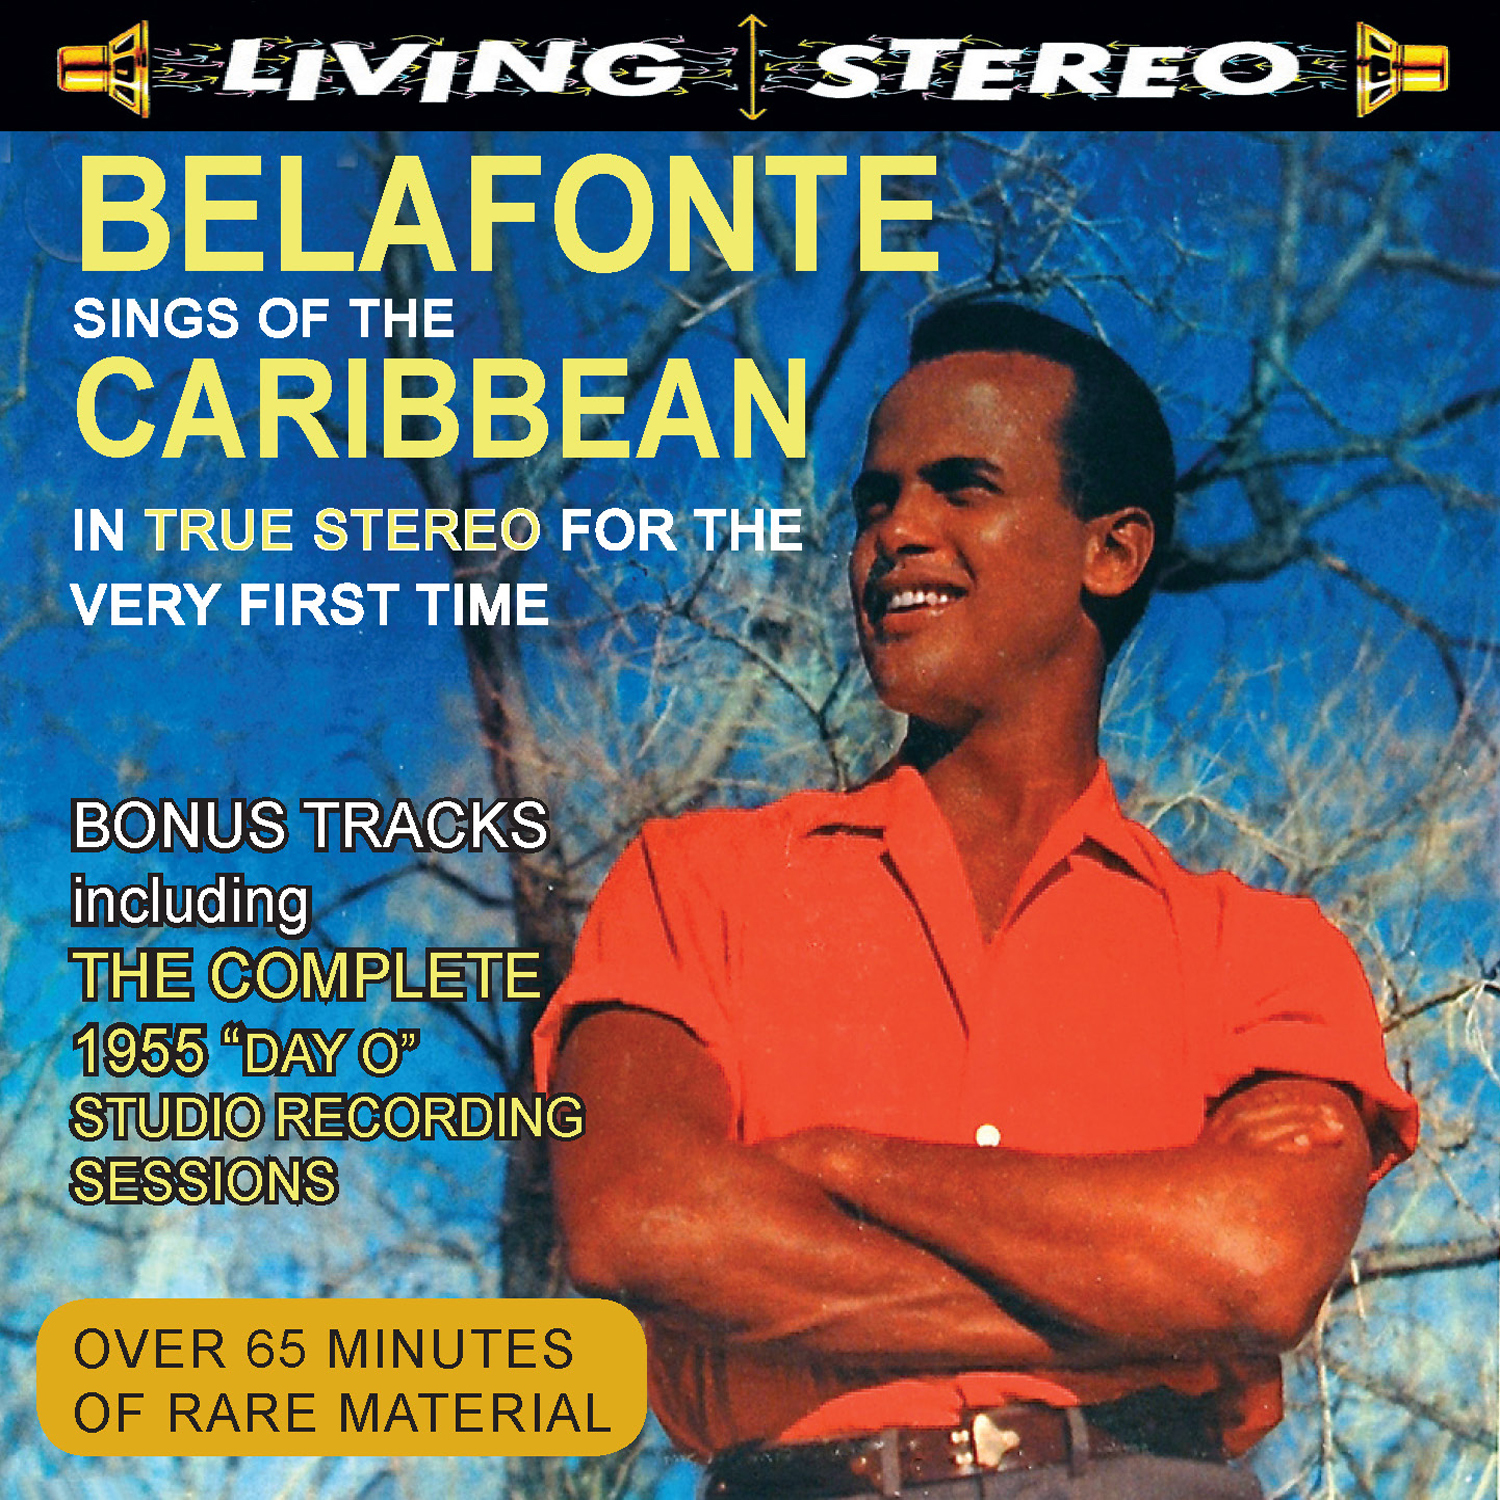 Belafonte Sings of the Caribbean in True Stereo